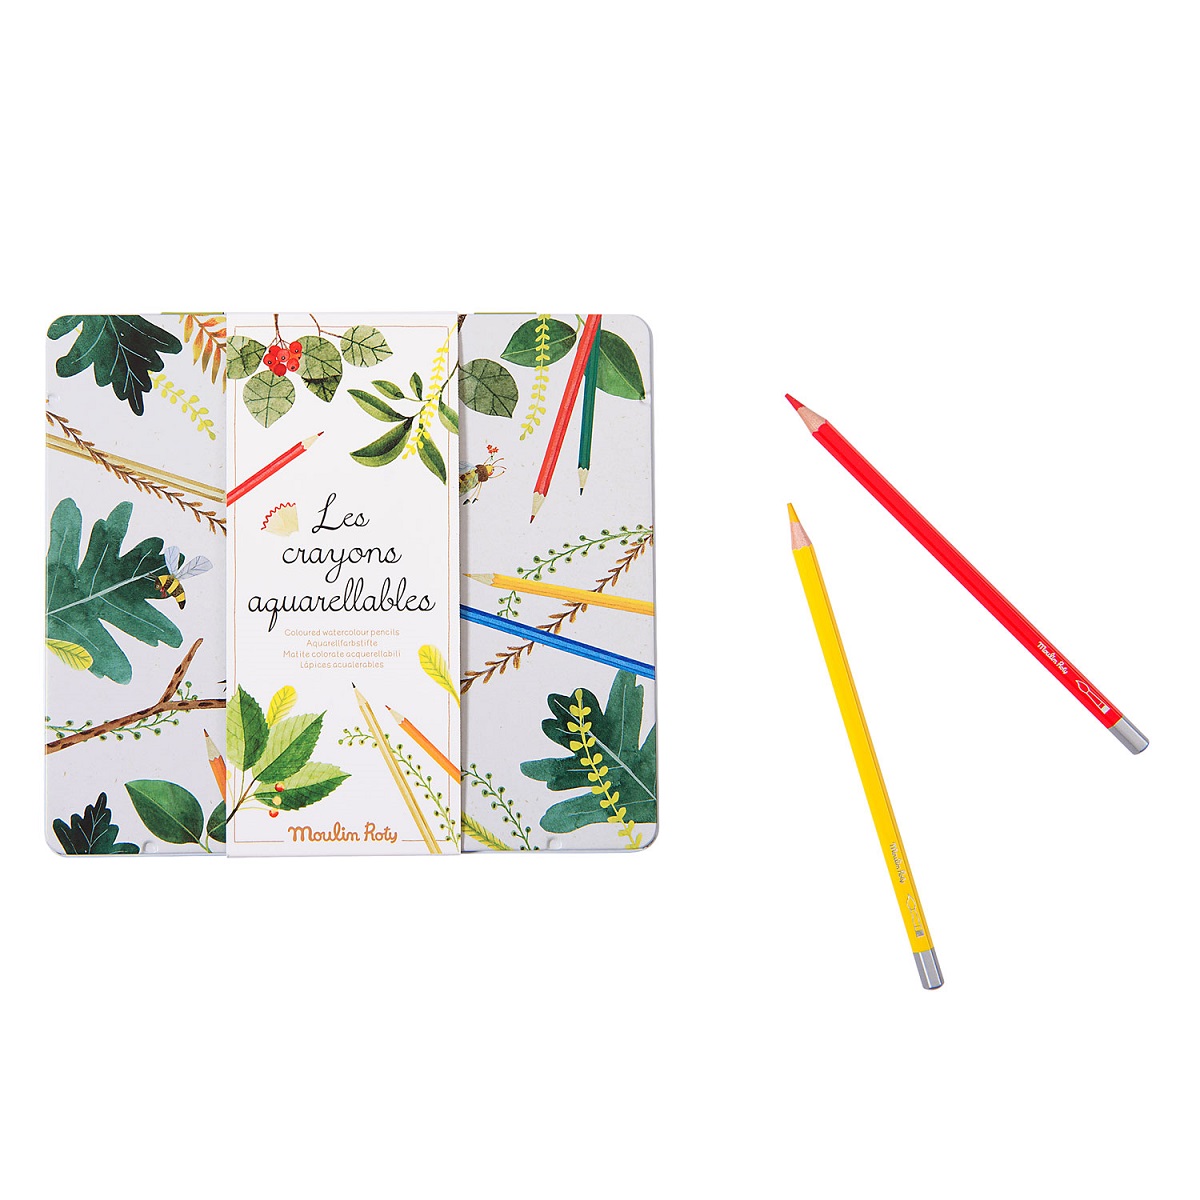 Le Botaniste - 24 Watercoloured Pencils